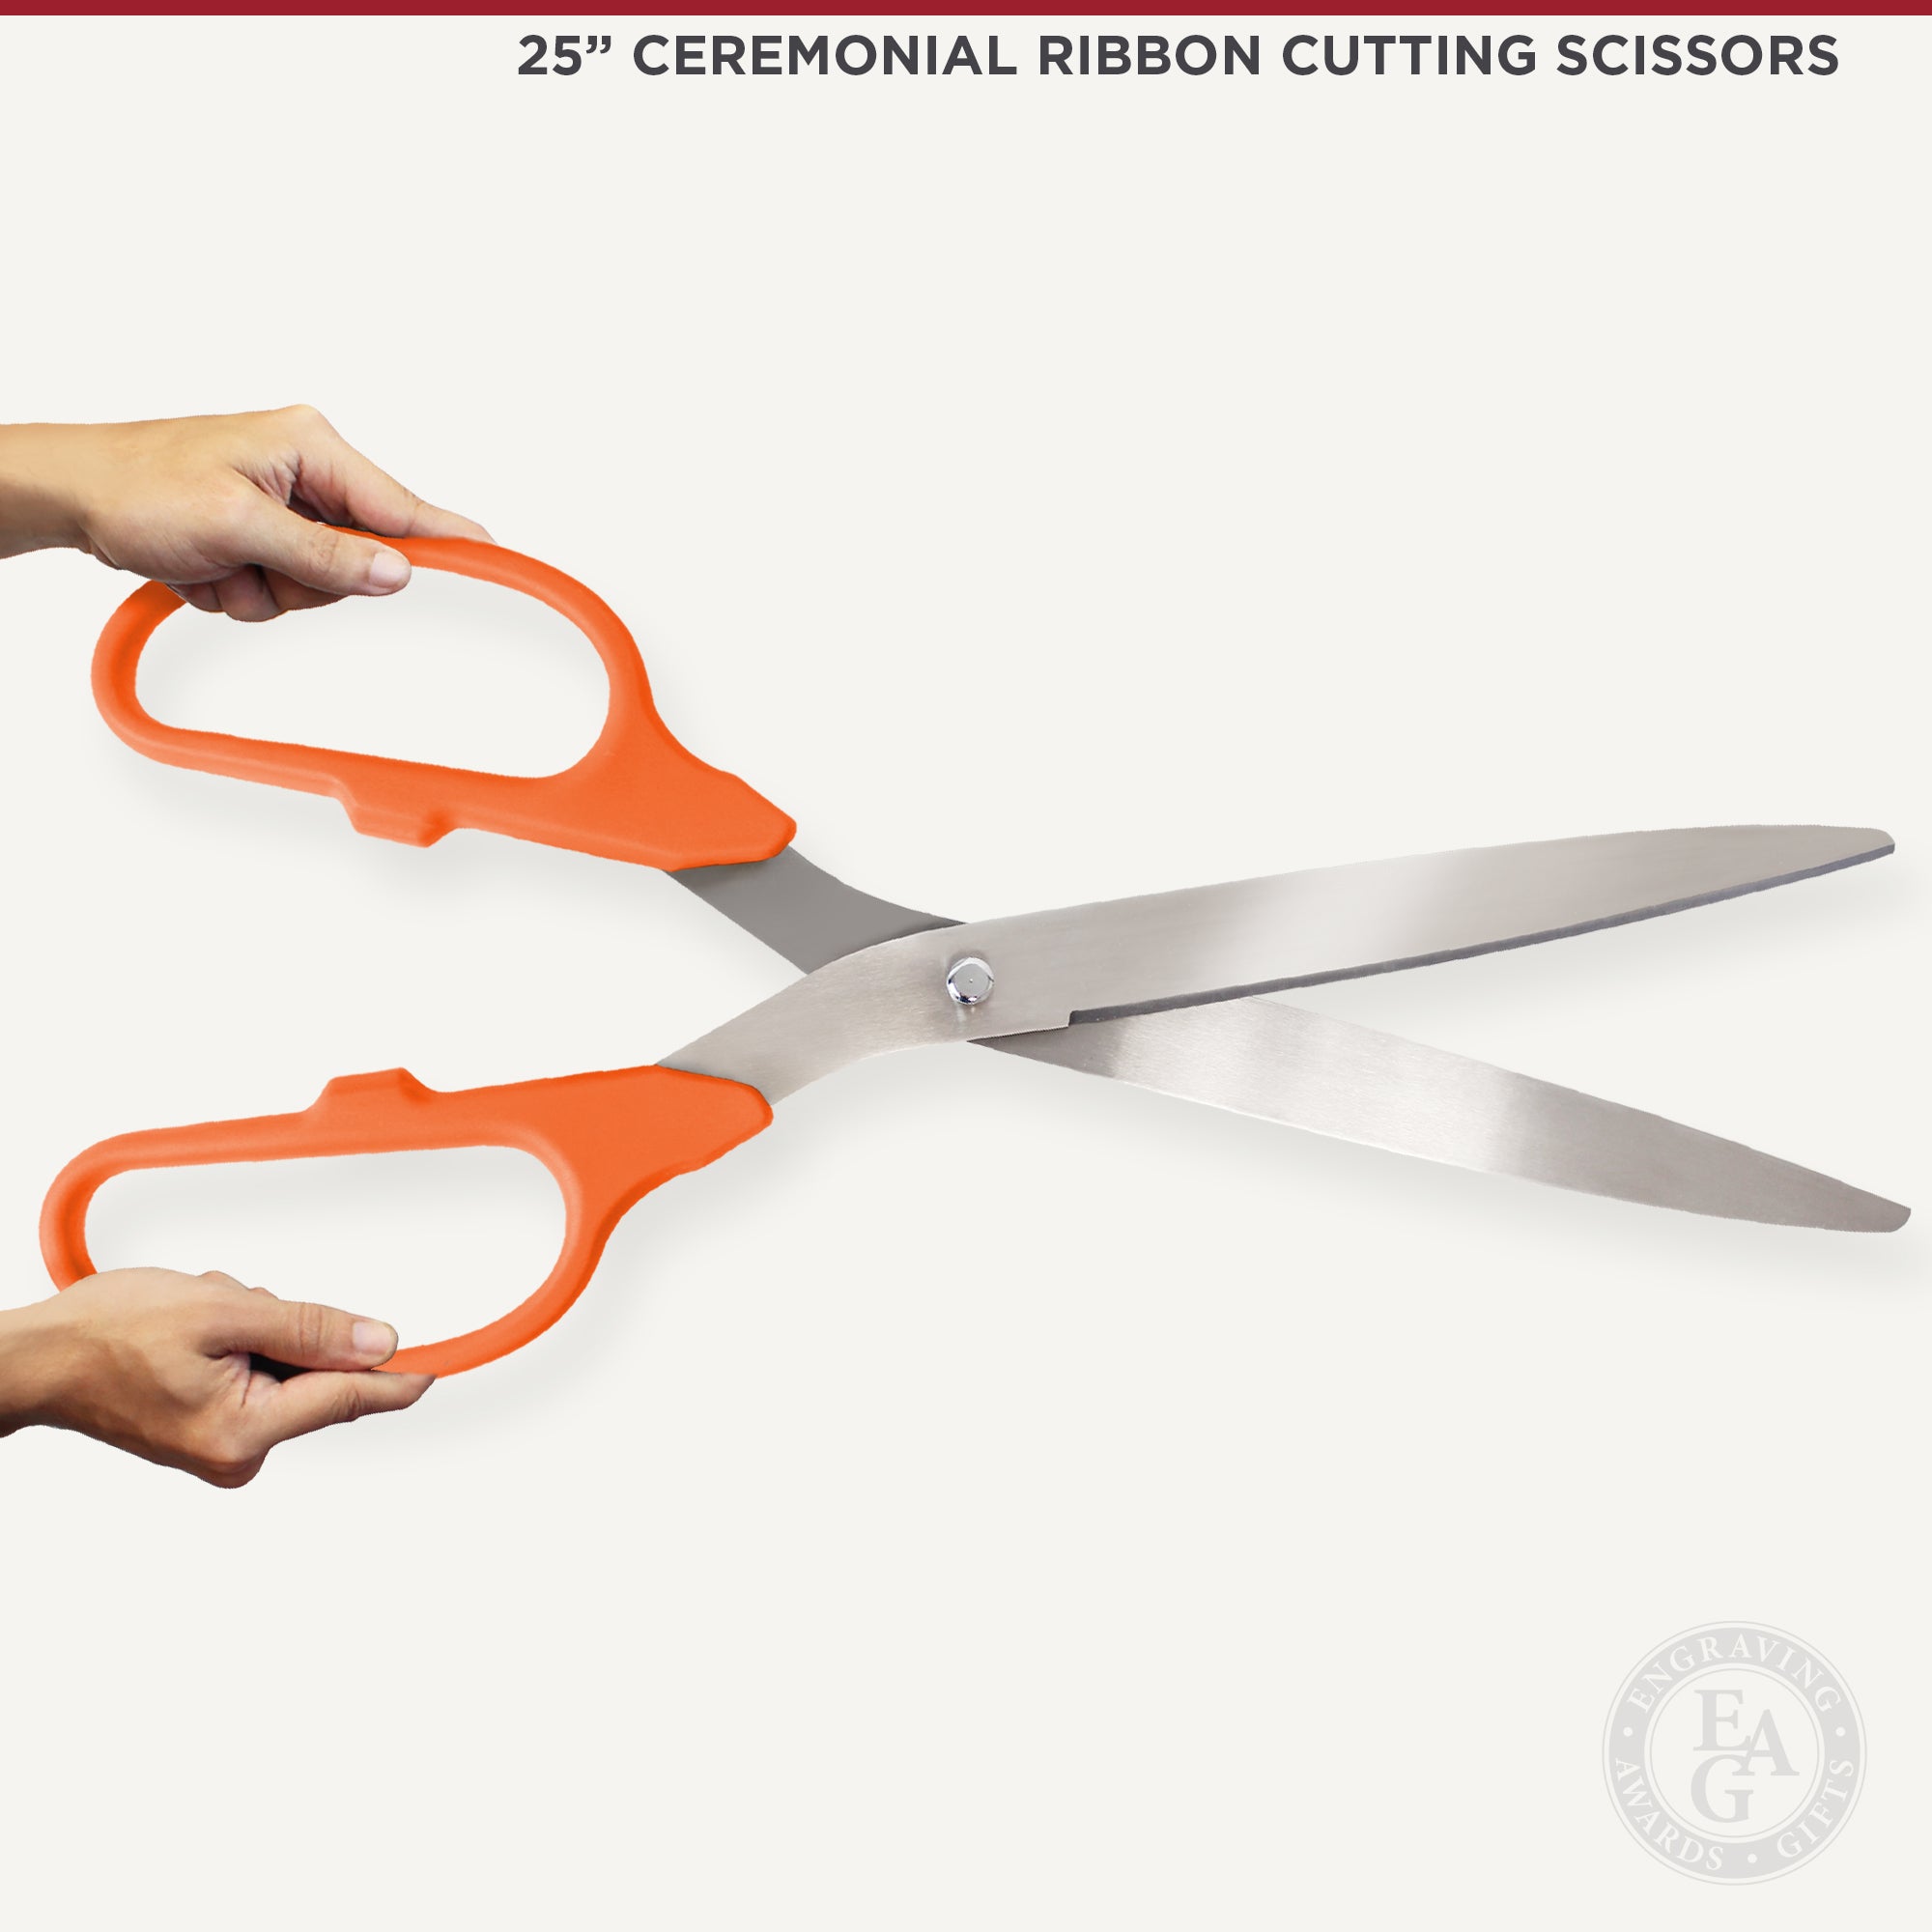 Sewing Scissors Ornament - Culbreth & Co.